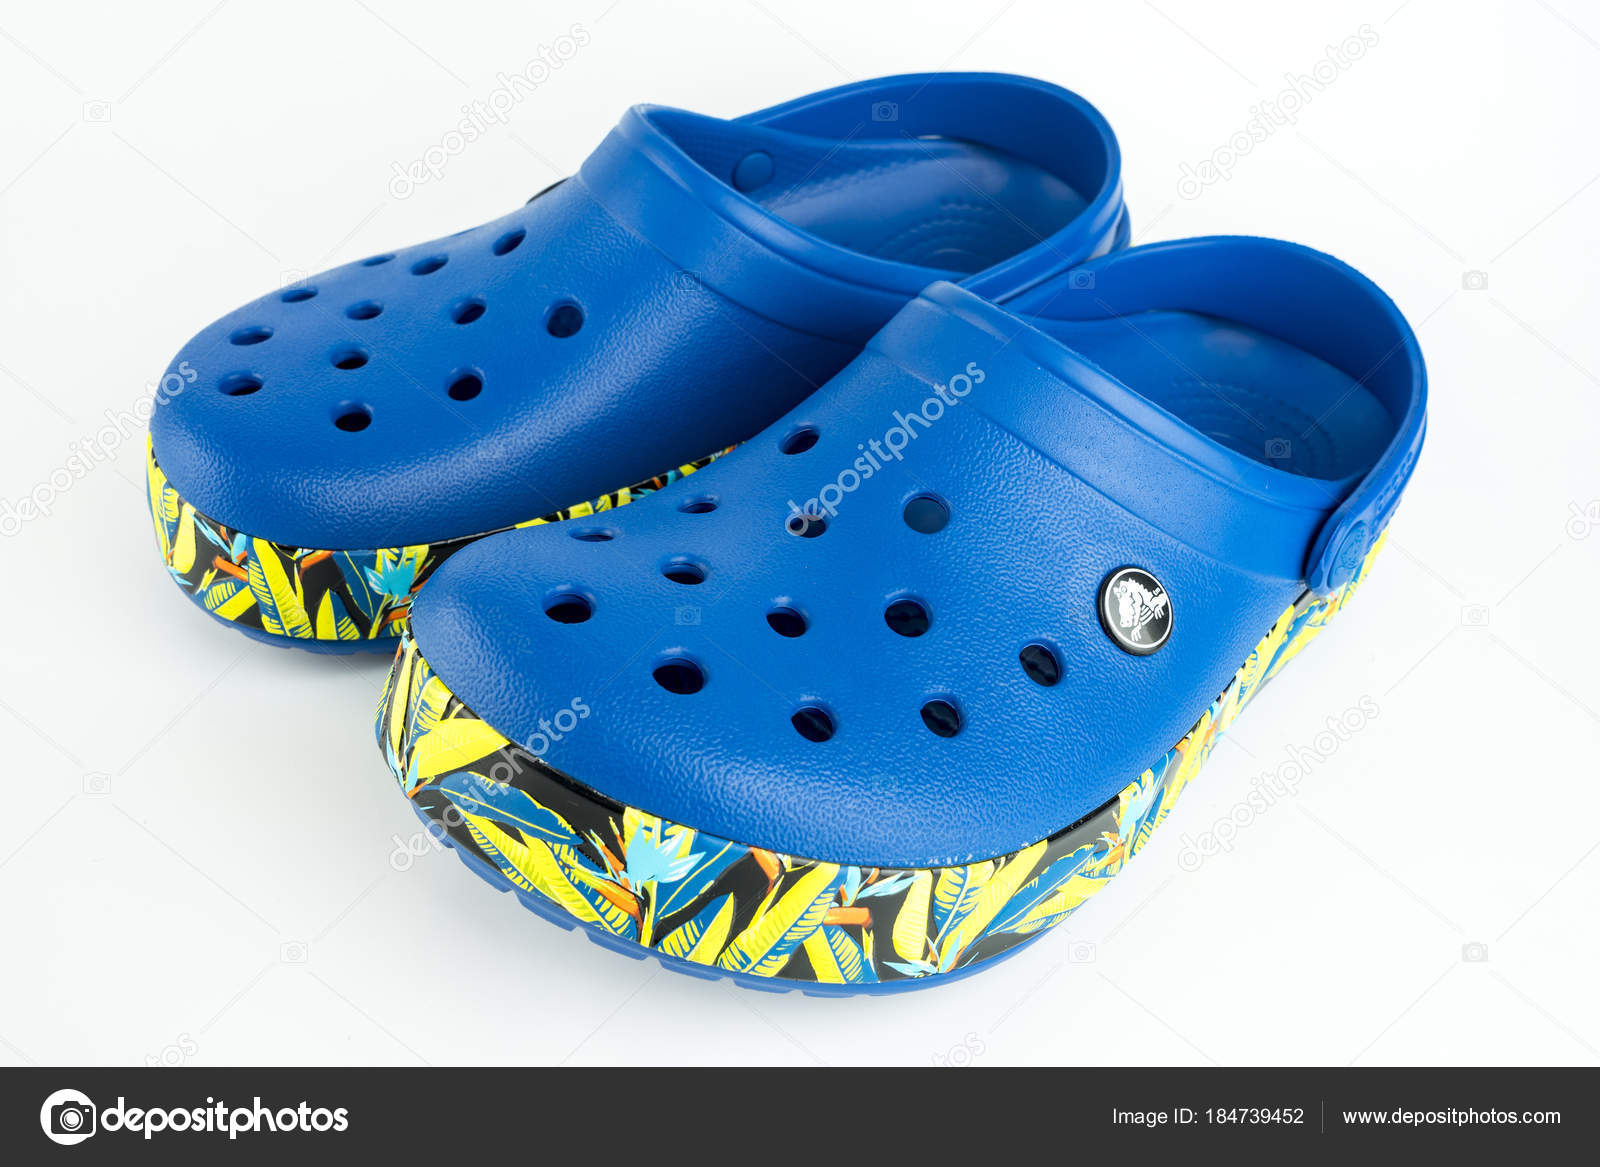 a pair of crocs